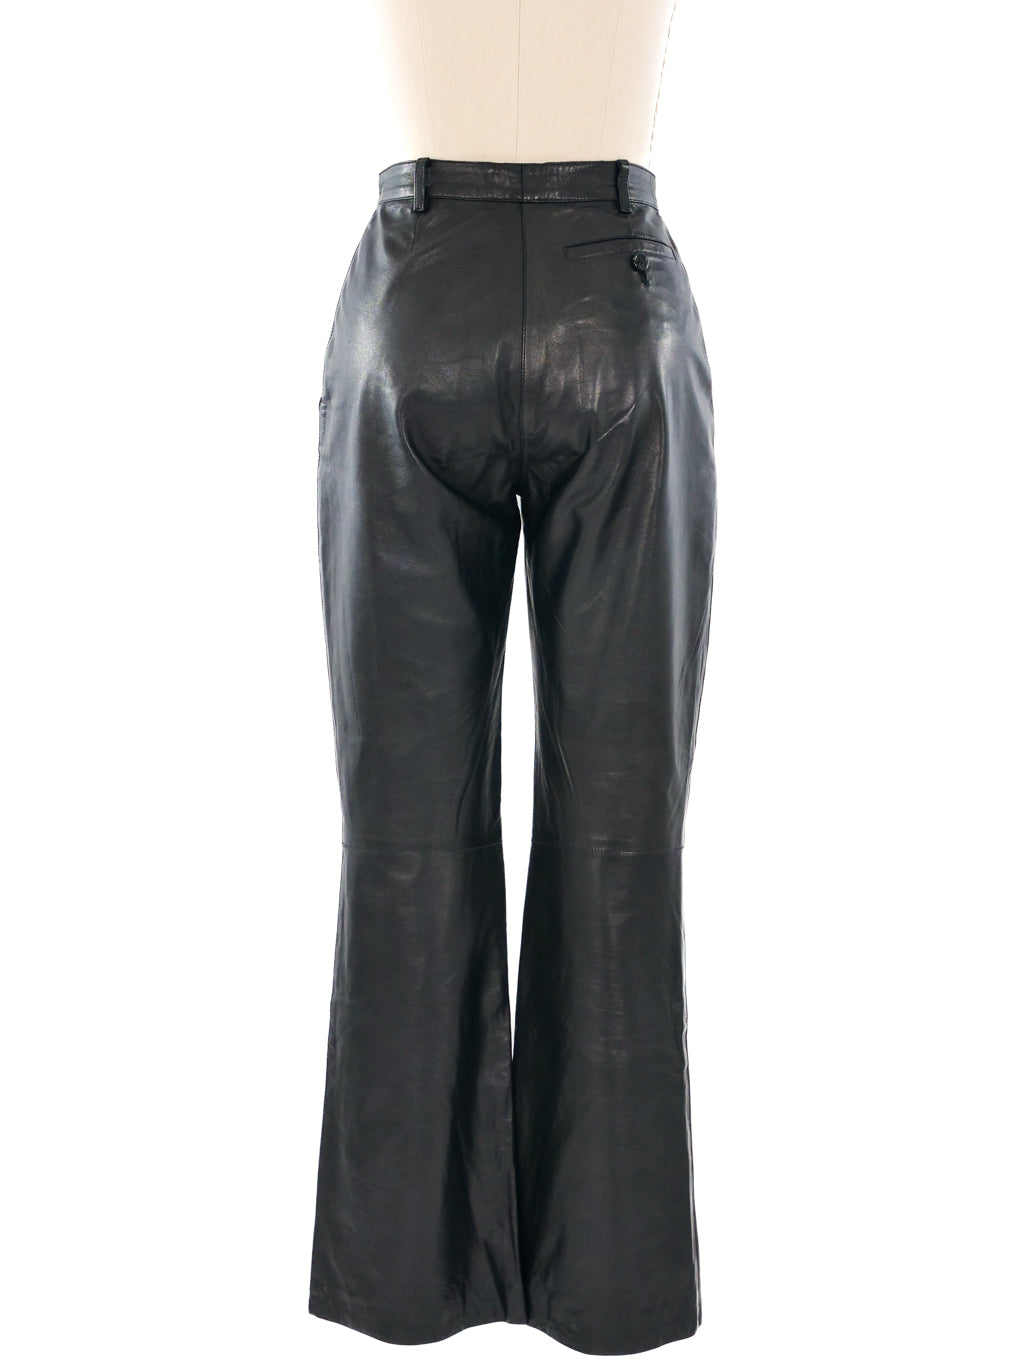 Prada Black Leather Trousers